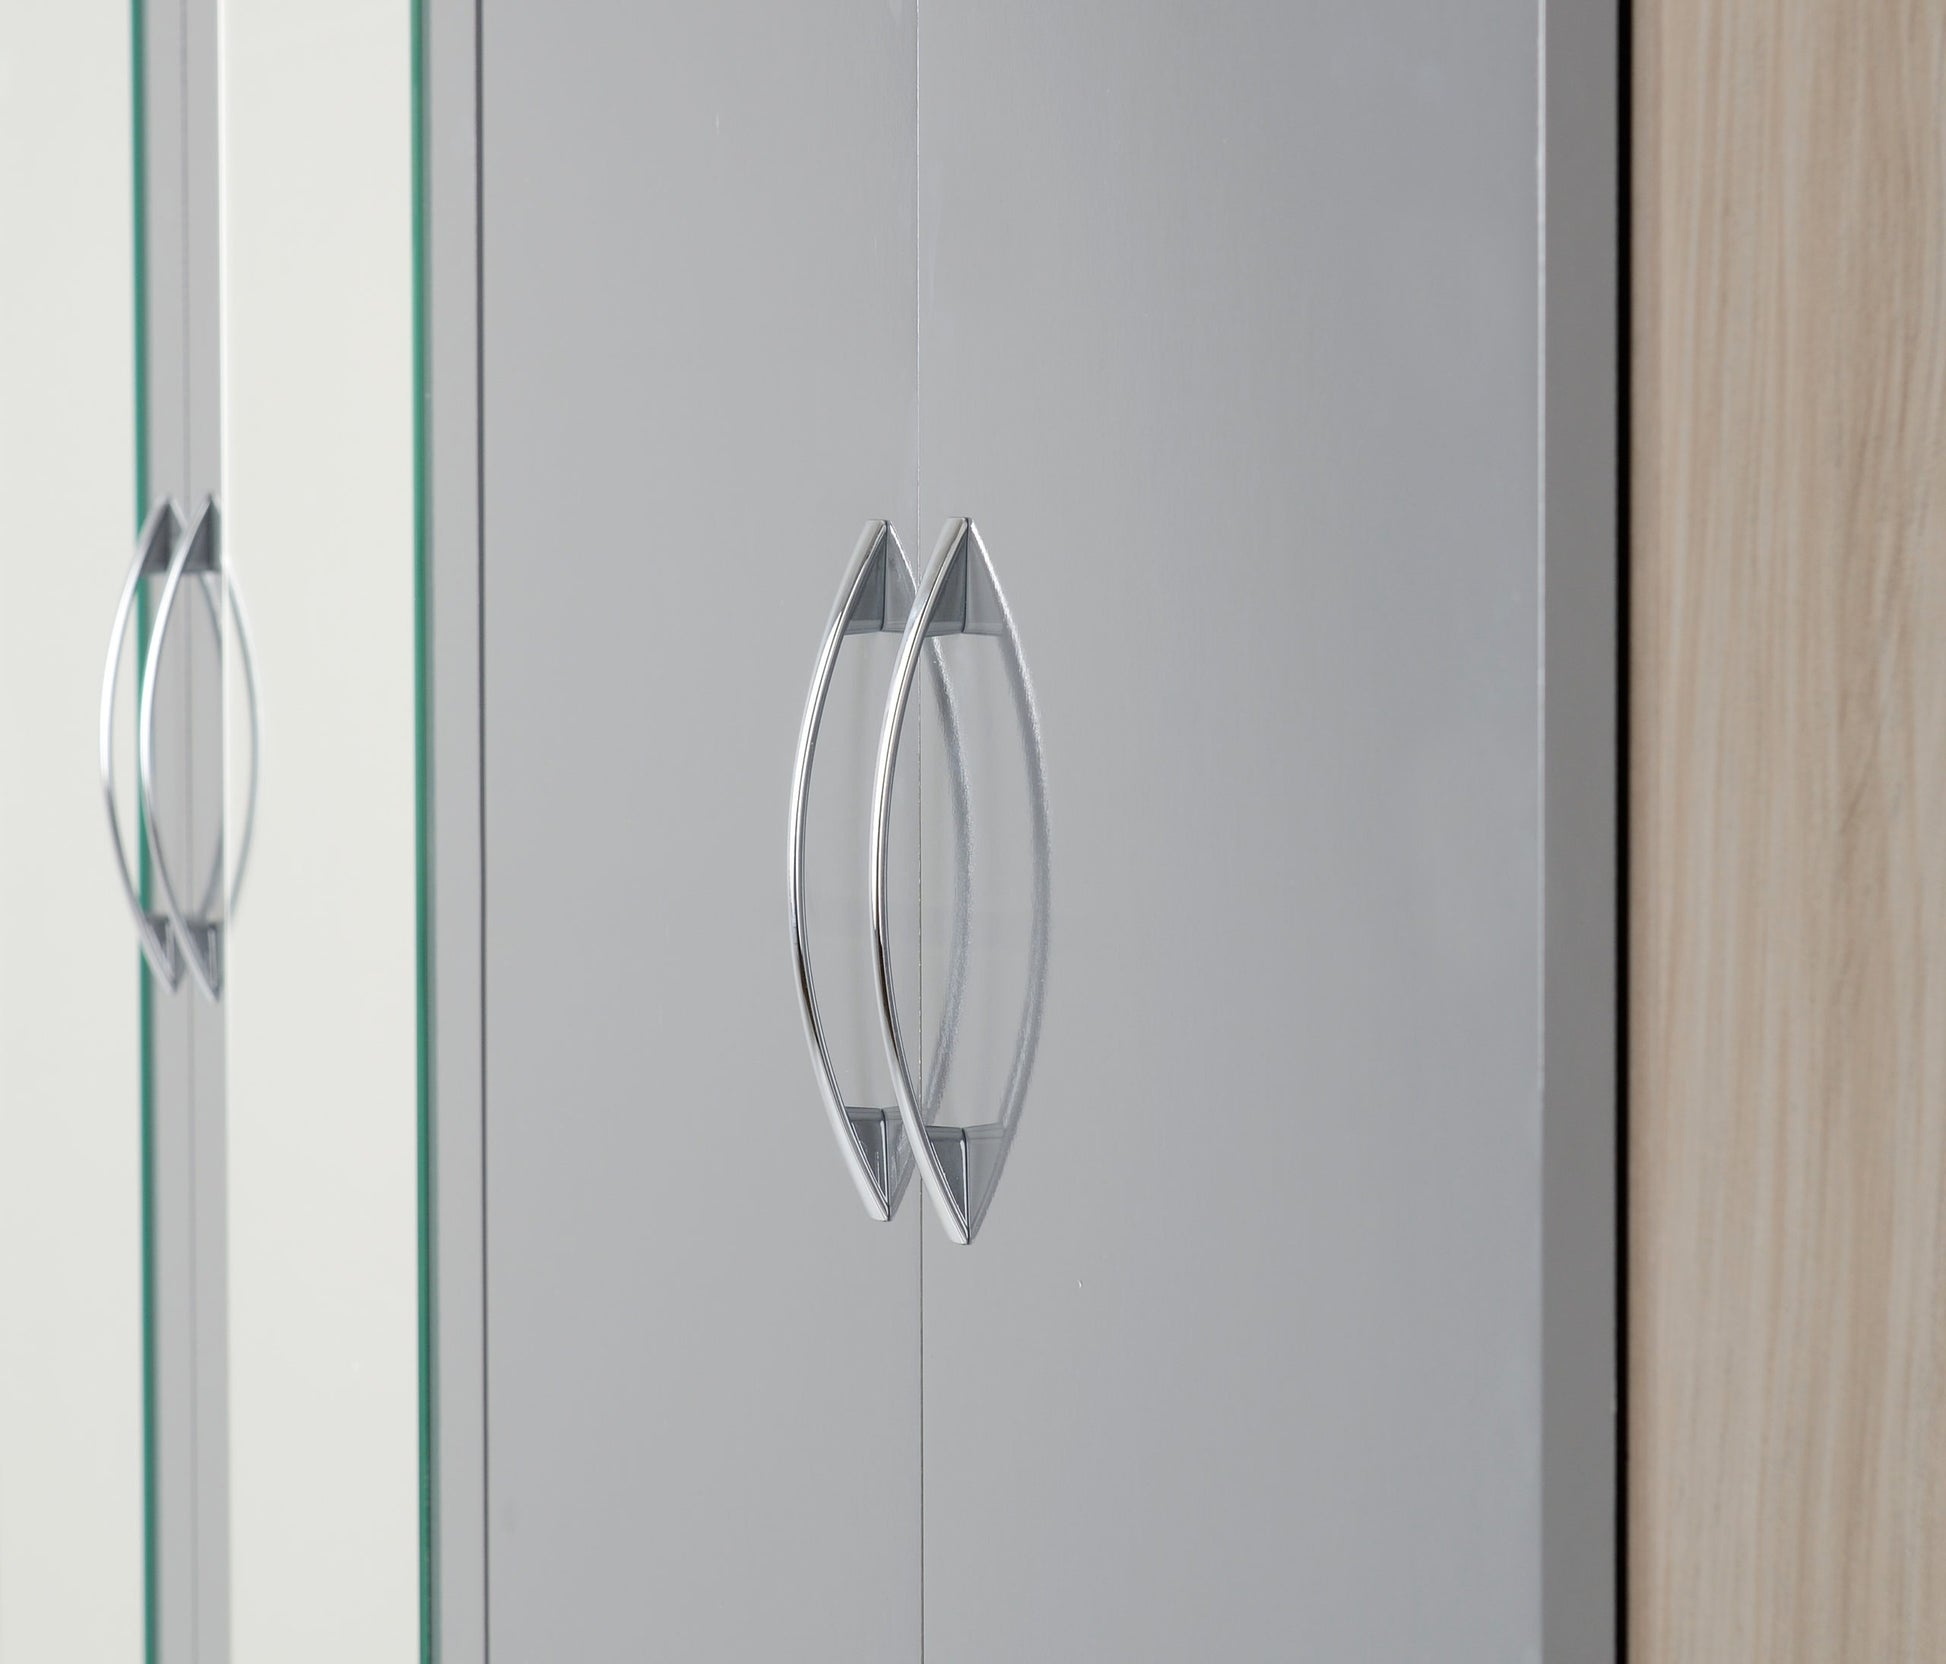 Nevada 6 Door 2 Drawer Mirrored Wardrobe - Grey Gloss/Light Oak Effect Veneer